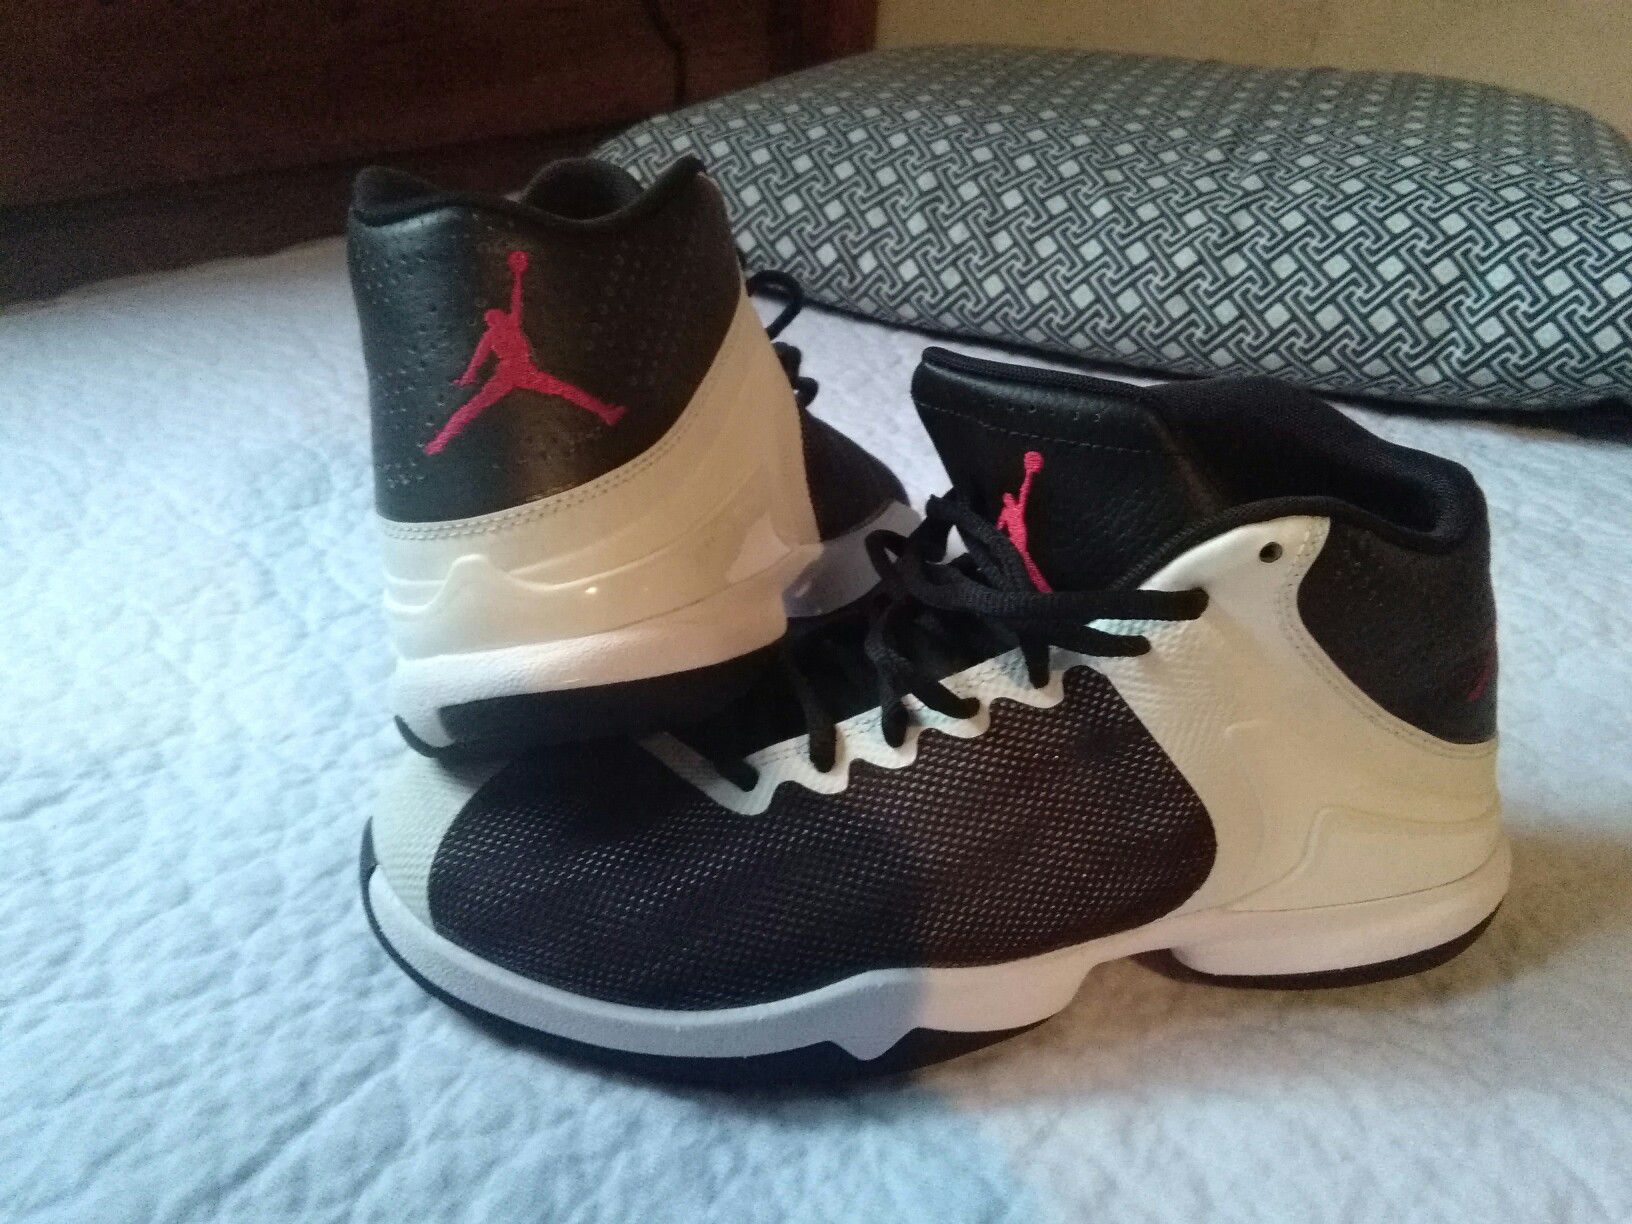 New size 8 Jordan